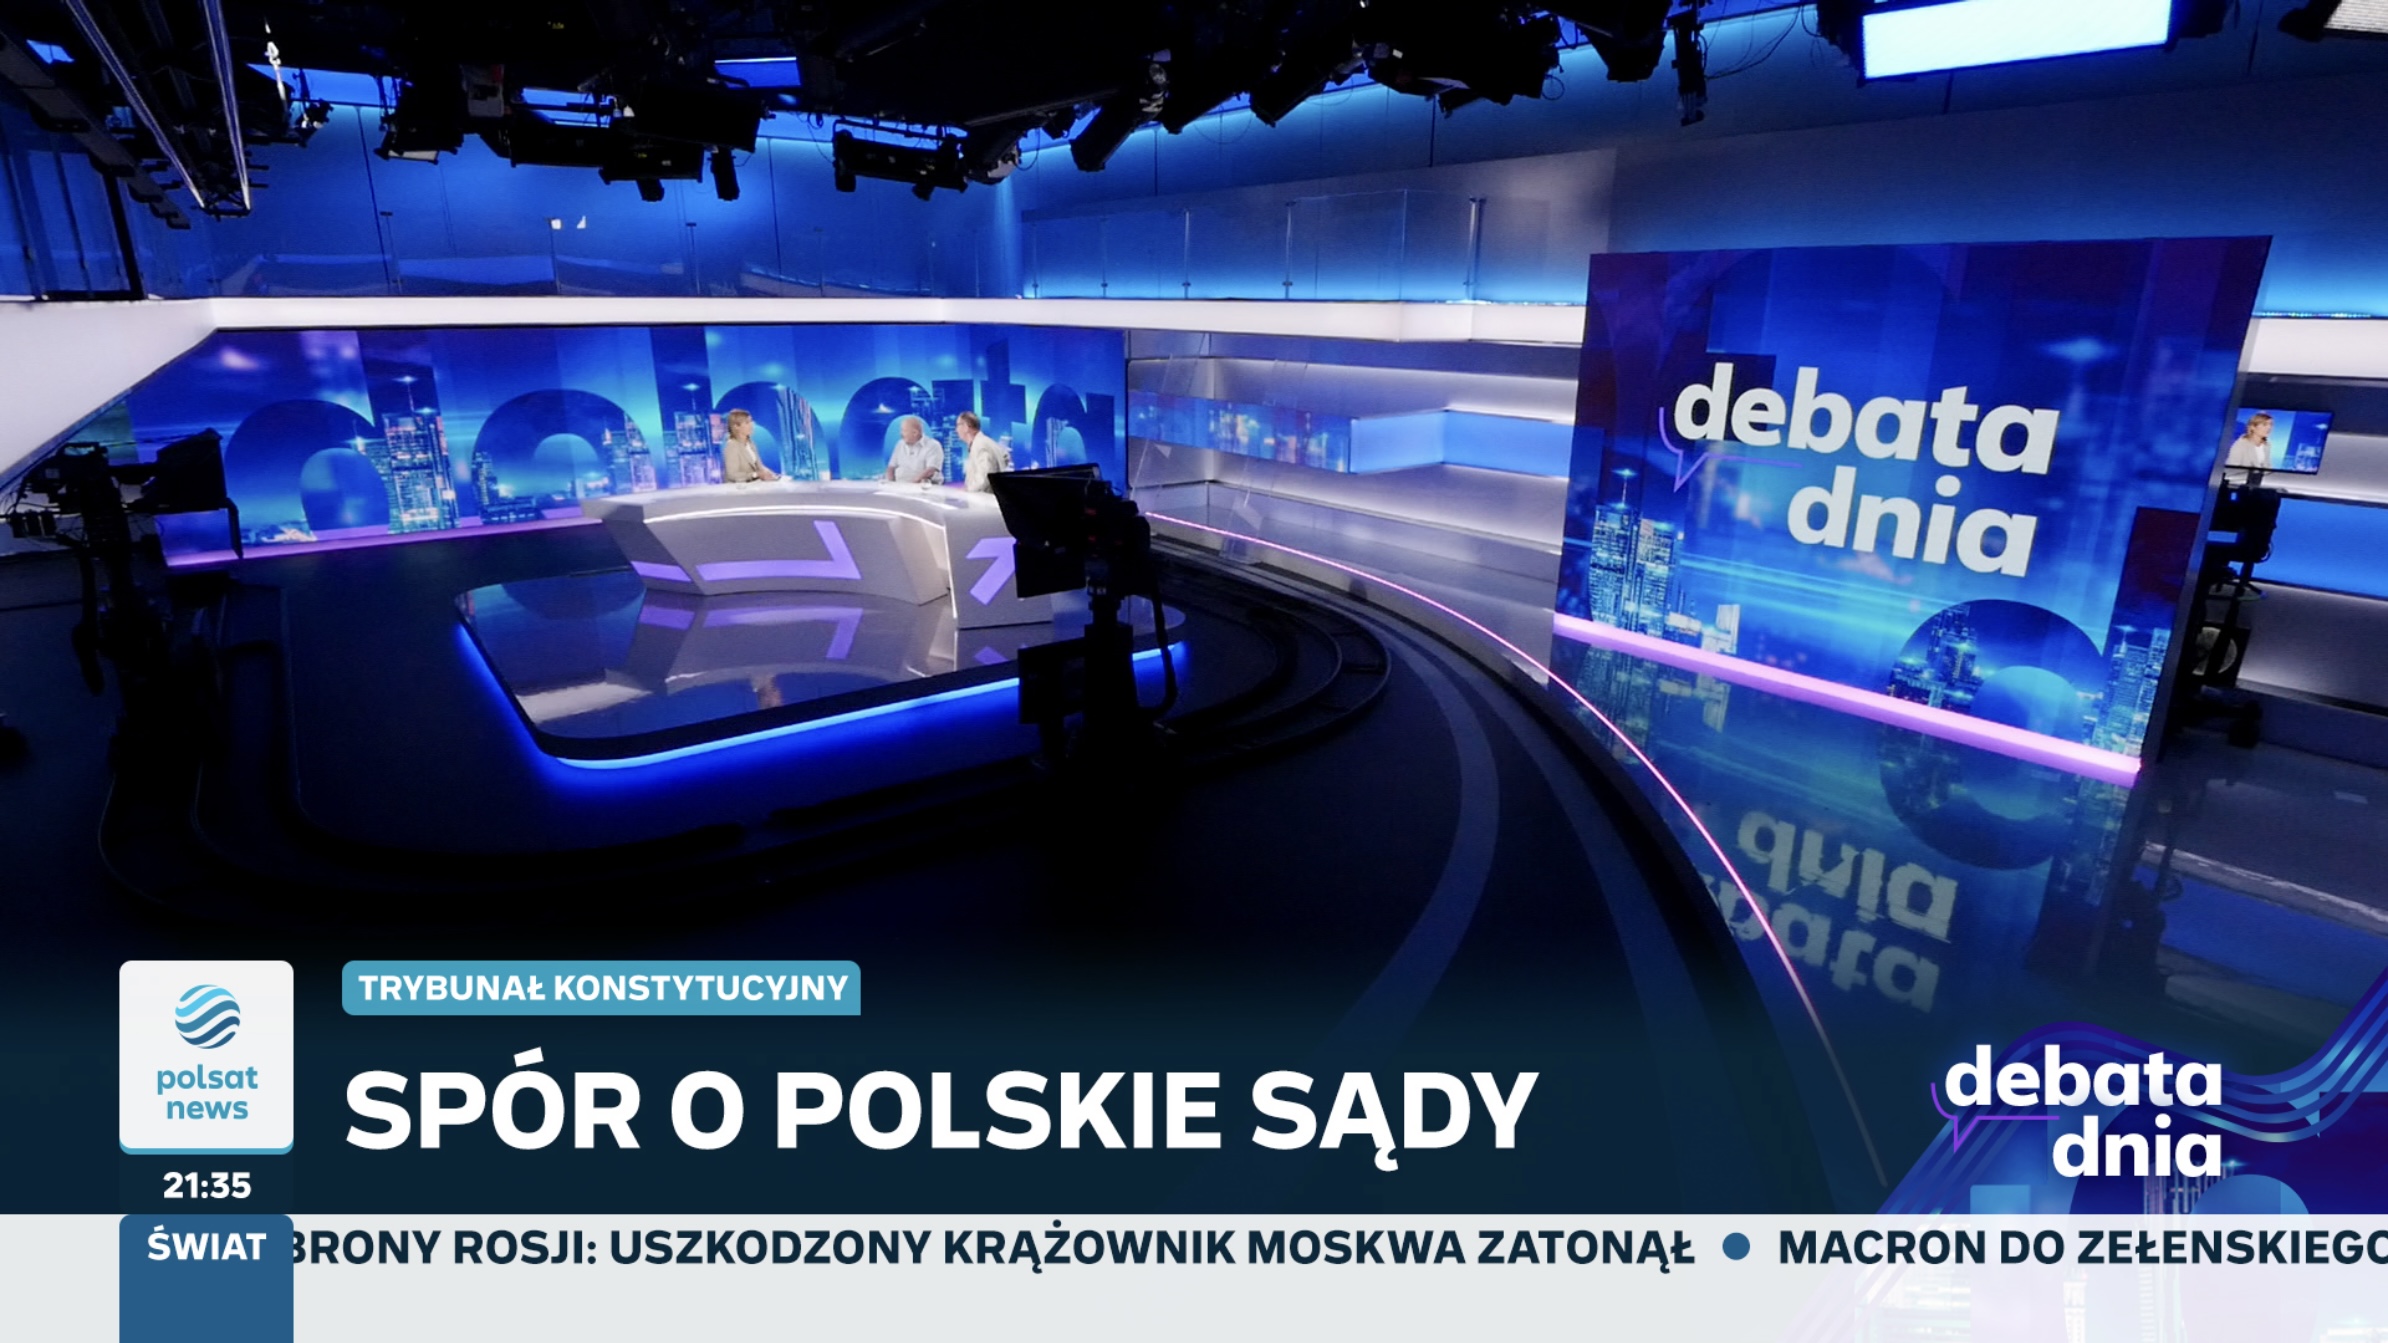 nowa-oprawa-polsat-news-od-19-grudnia-tvpolsat-info